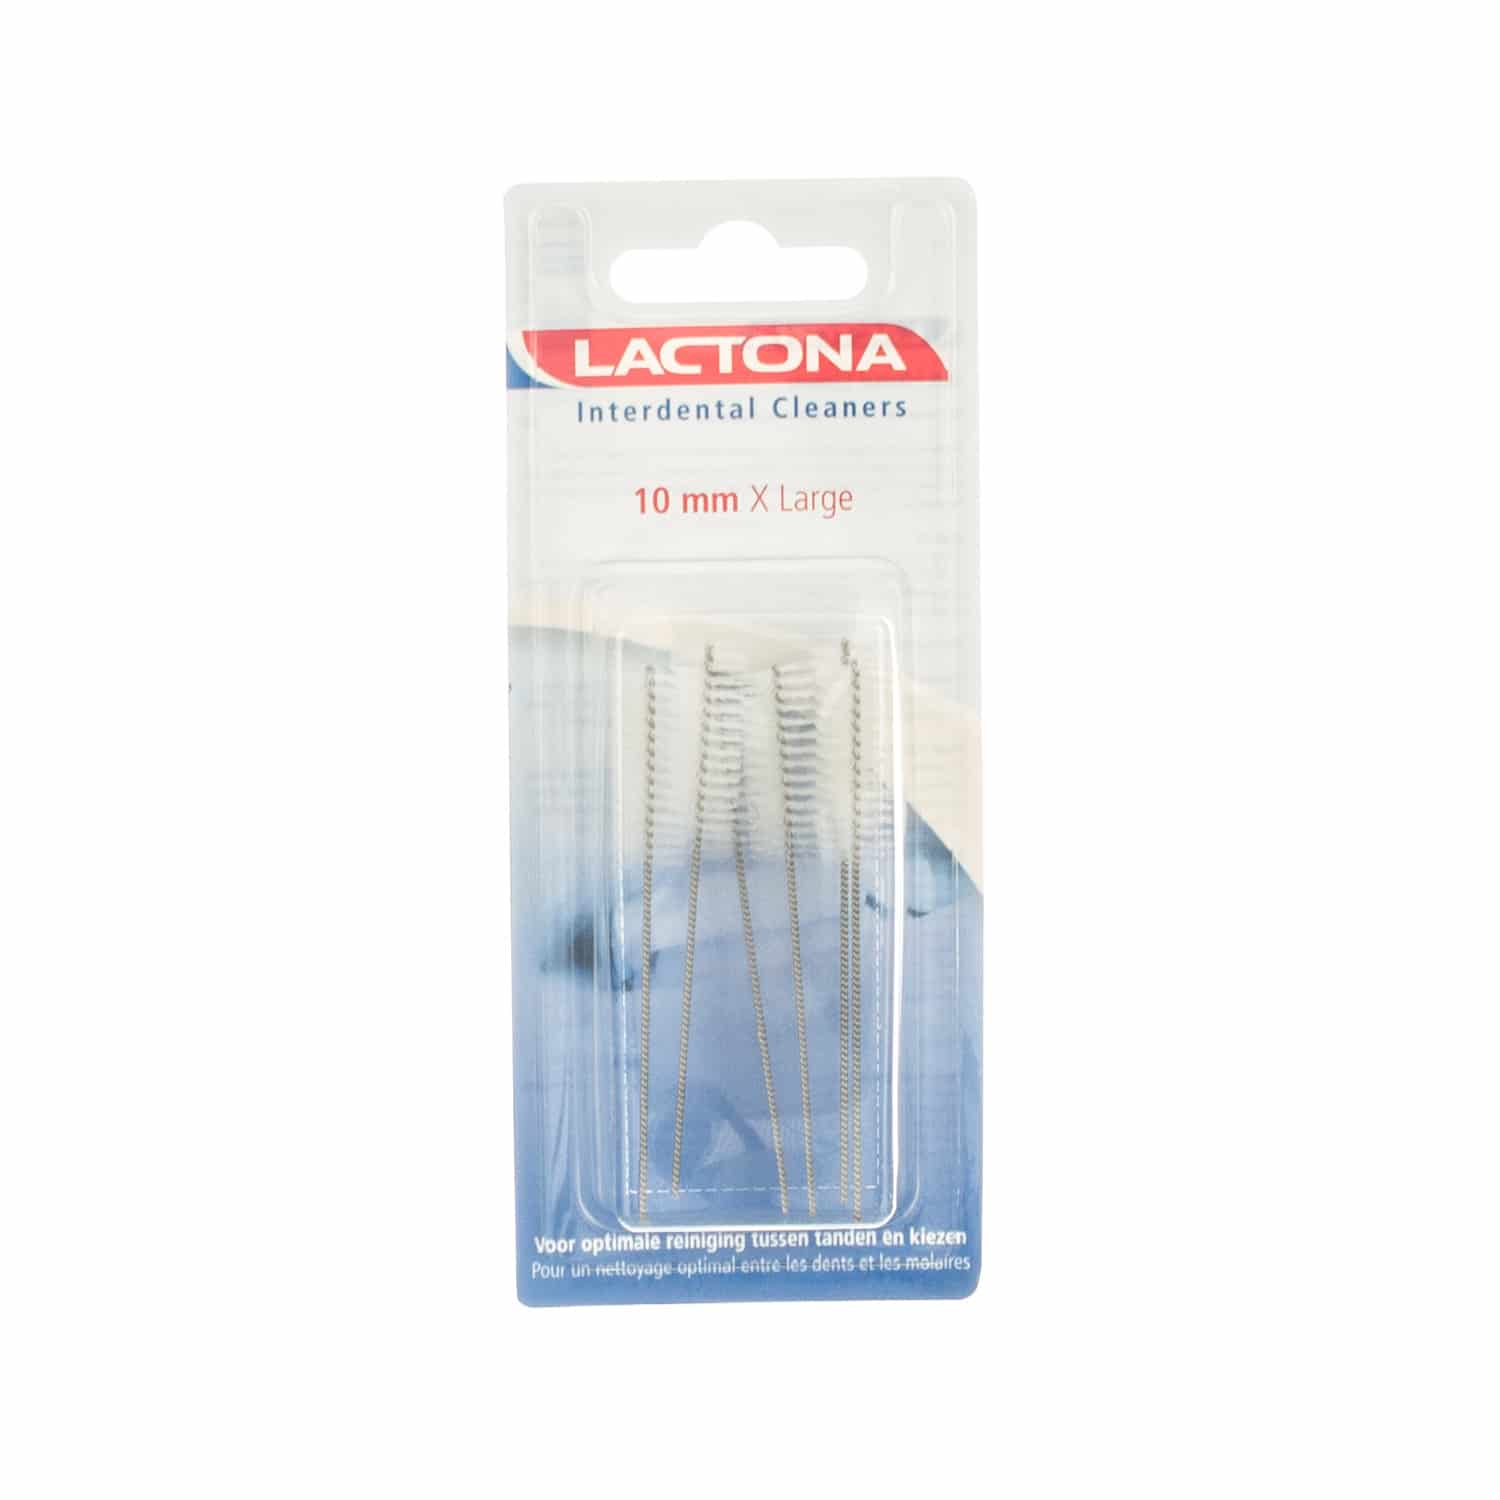 Lactona Interdental Cleaners 10 mm XL